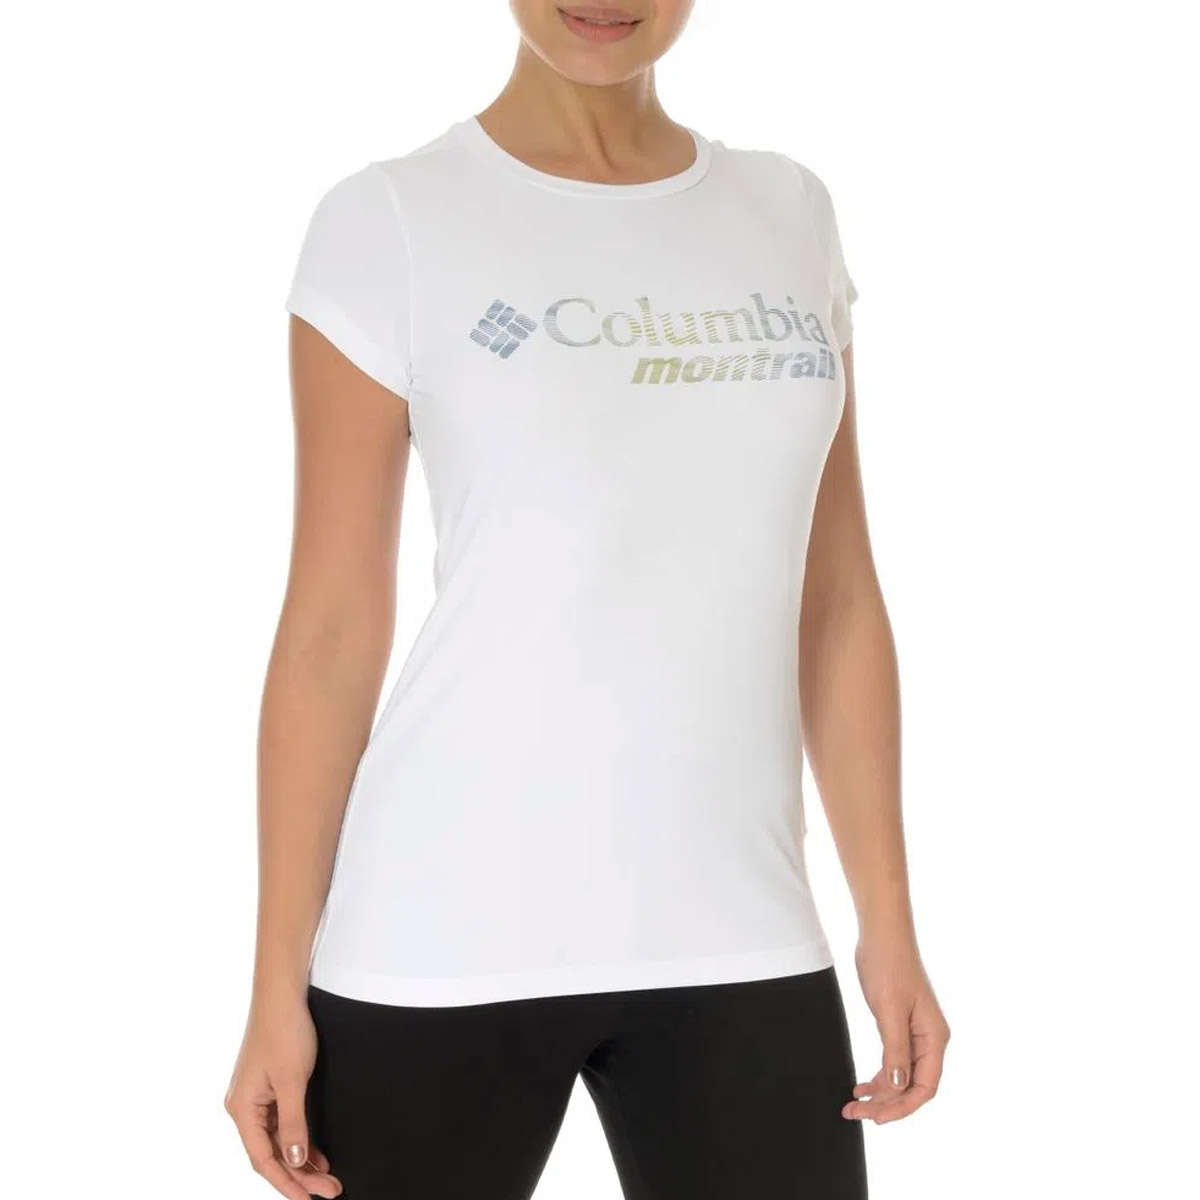 Camiseta Columbia Feminina Neblina Montrail Manga Curta Branca